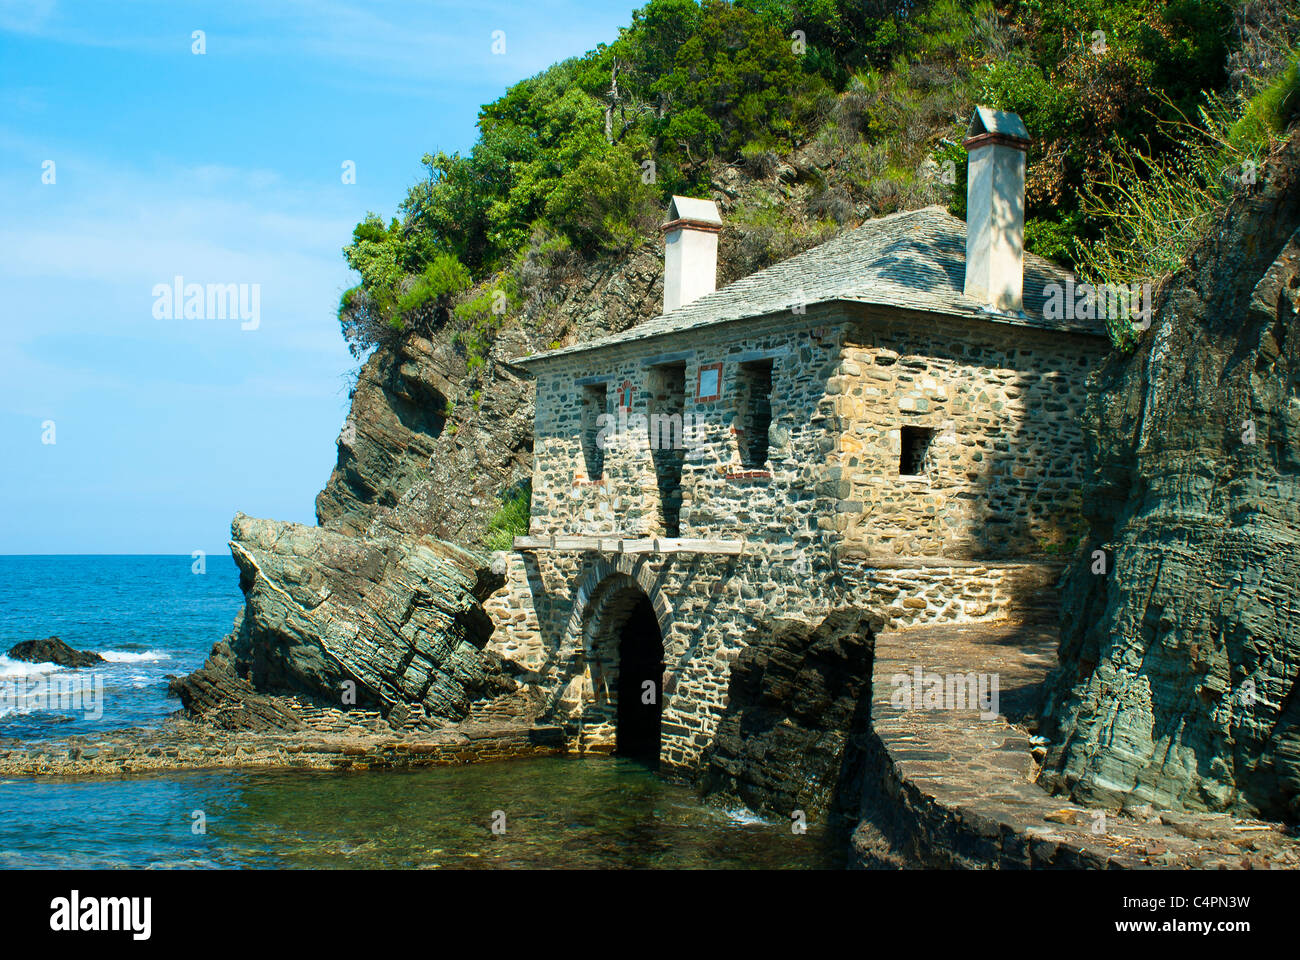 Traditional house on a beach, Greece Stock Photo